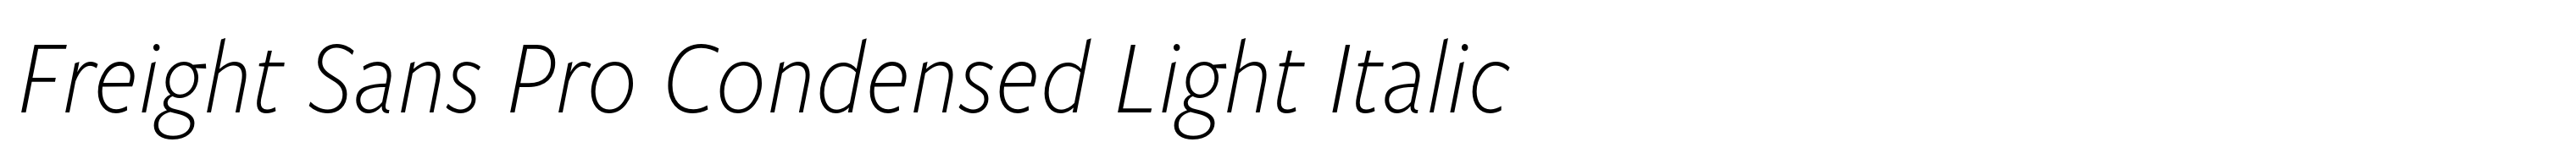 Freight Sans Pro Condensed Light Italic